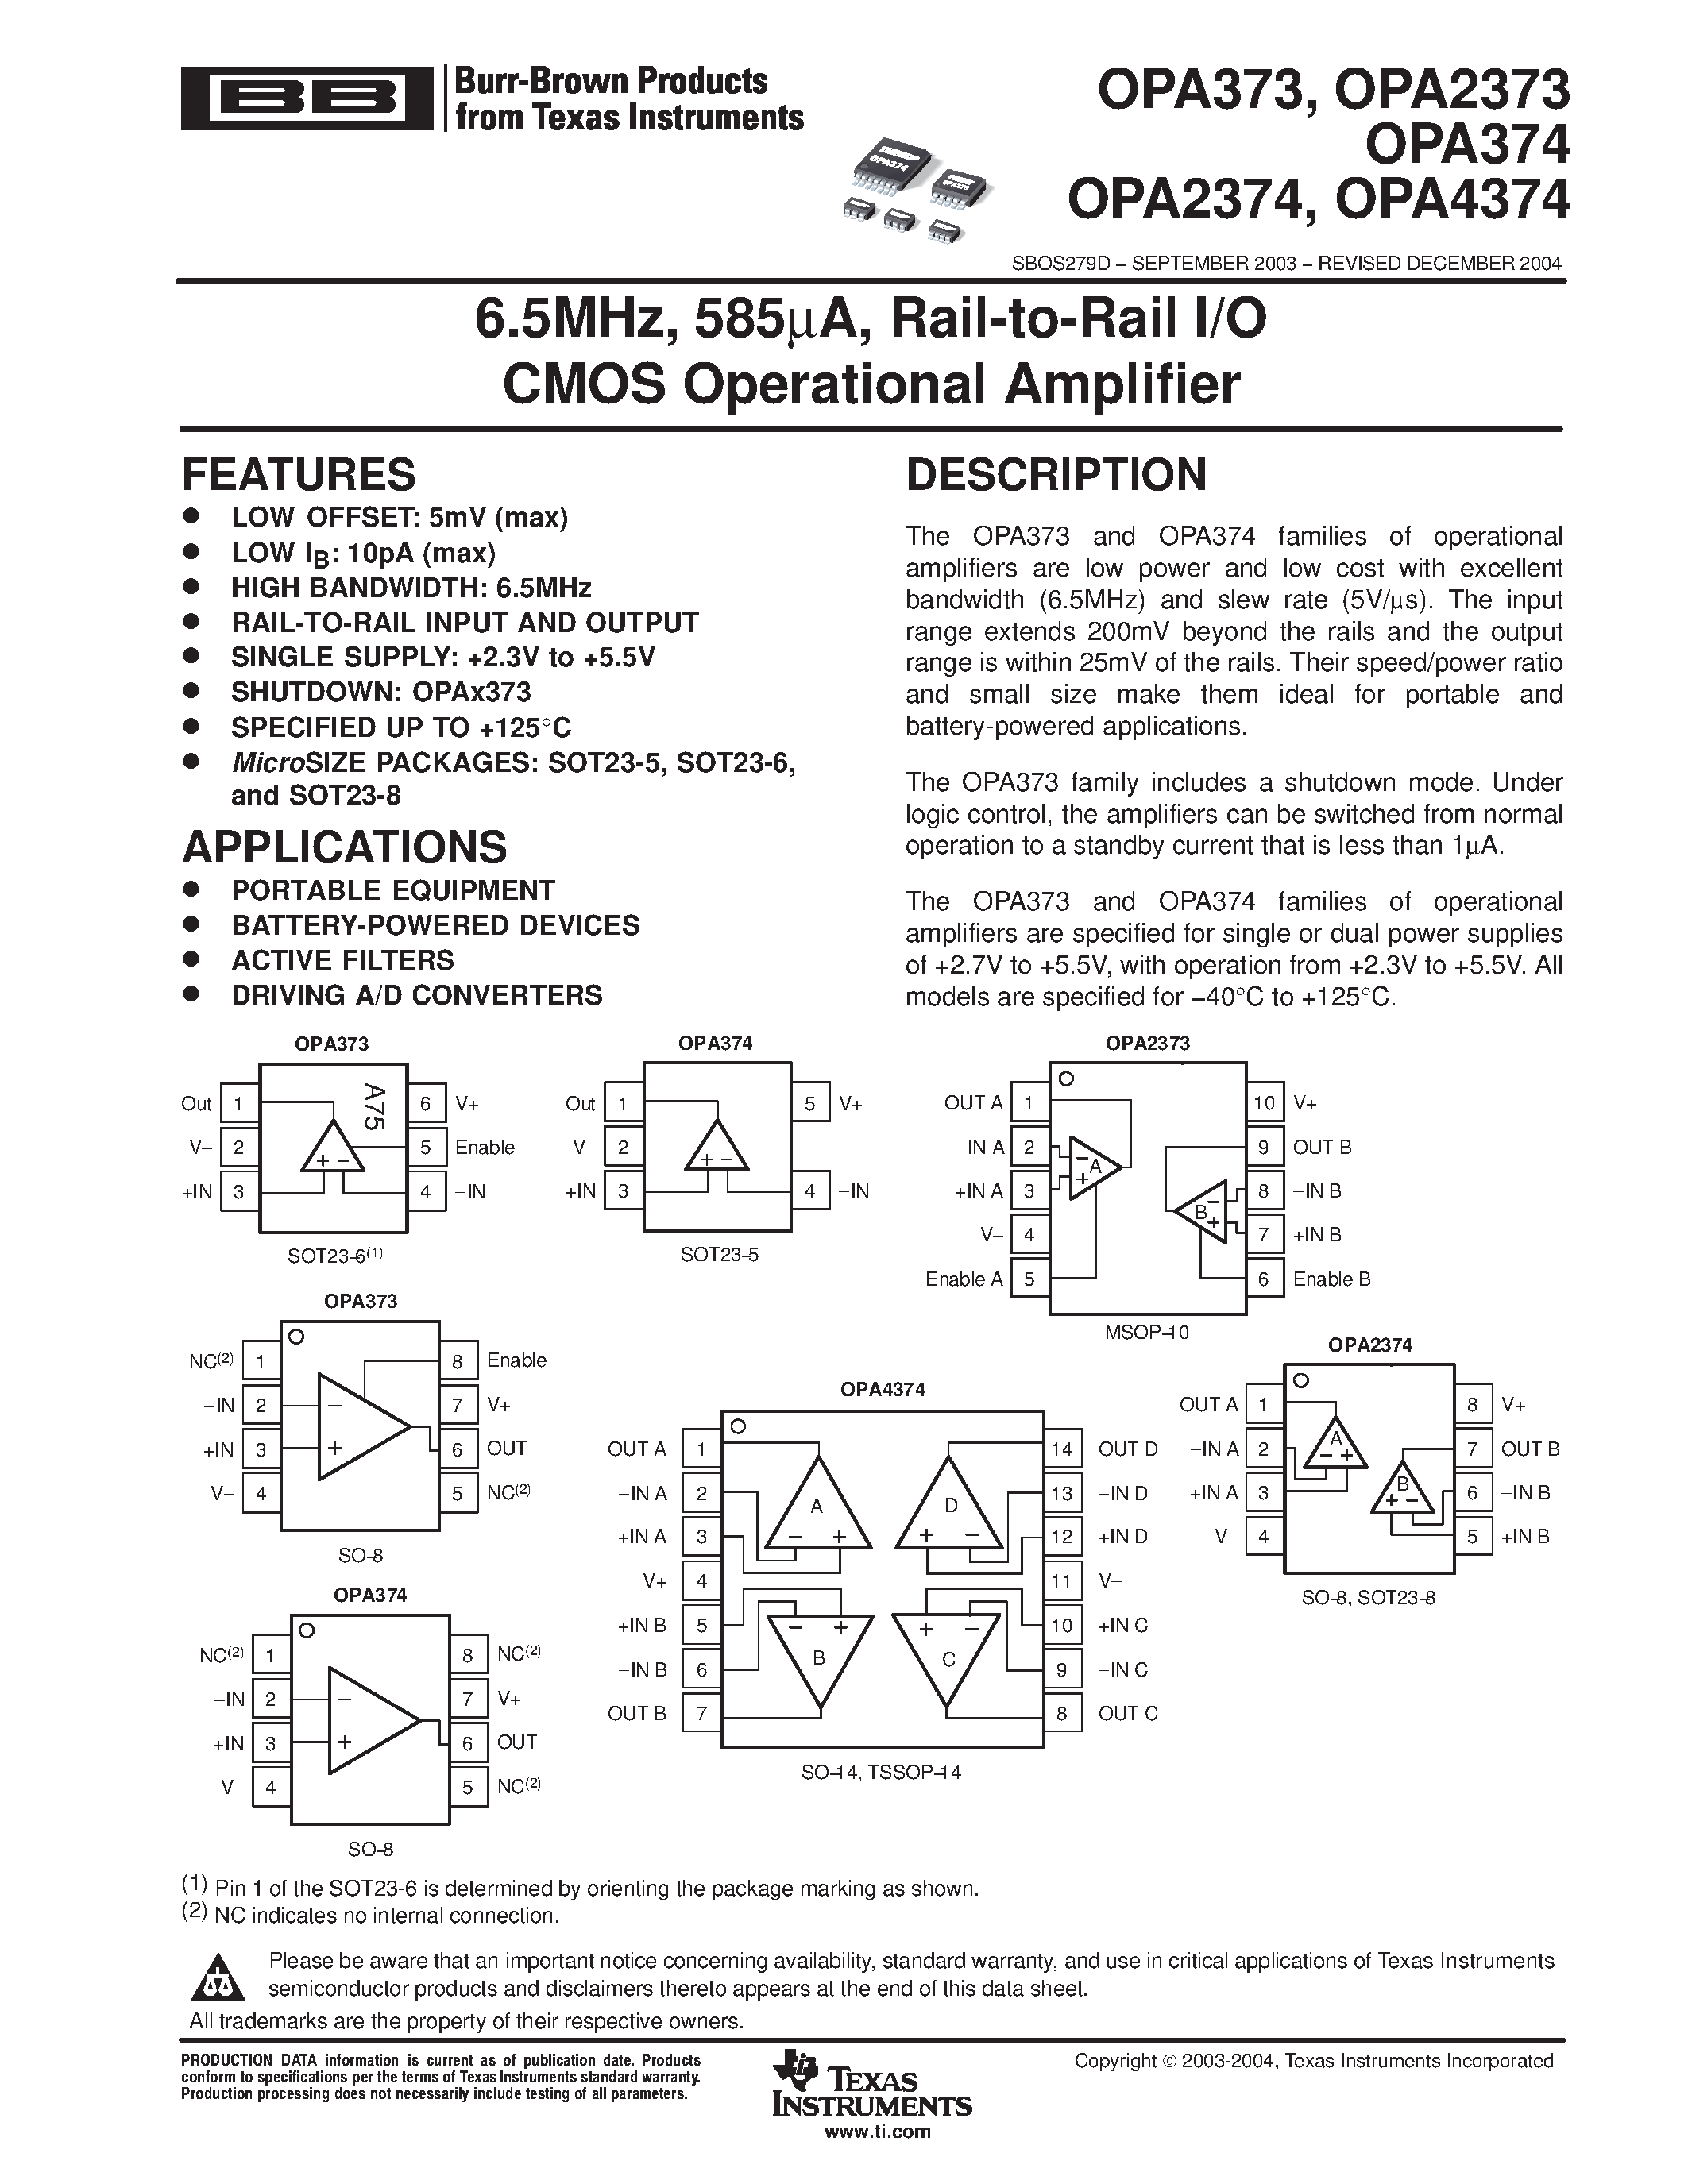 Datasheet OPA374 - 6.5MHz / 585UA / Rail-to-Rail I/O CMOS Operational Amplifier page 1